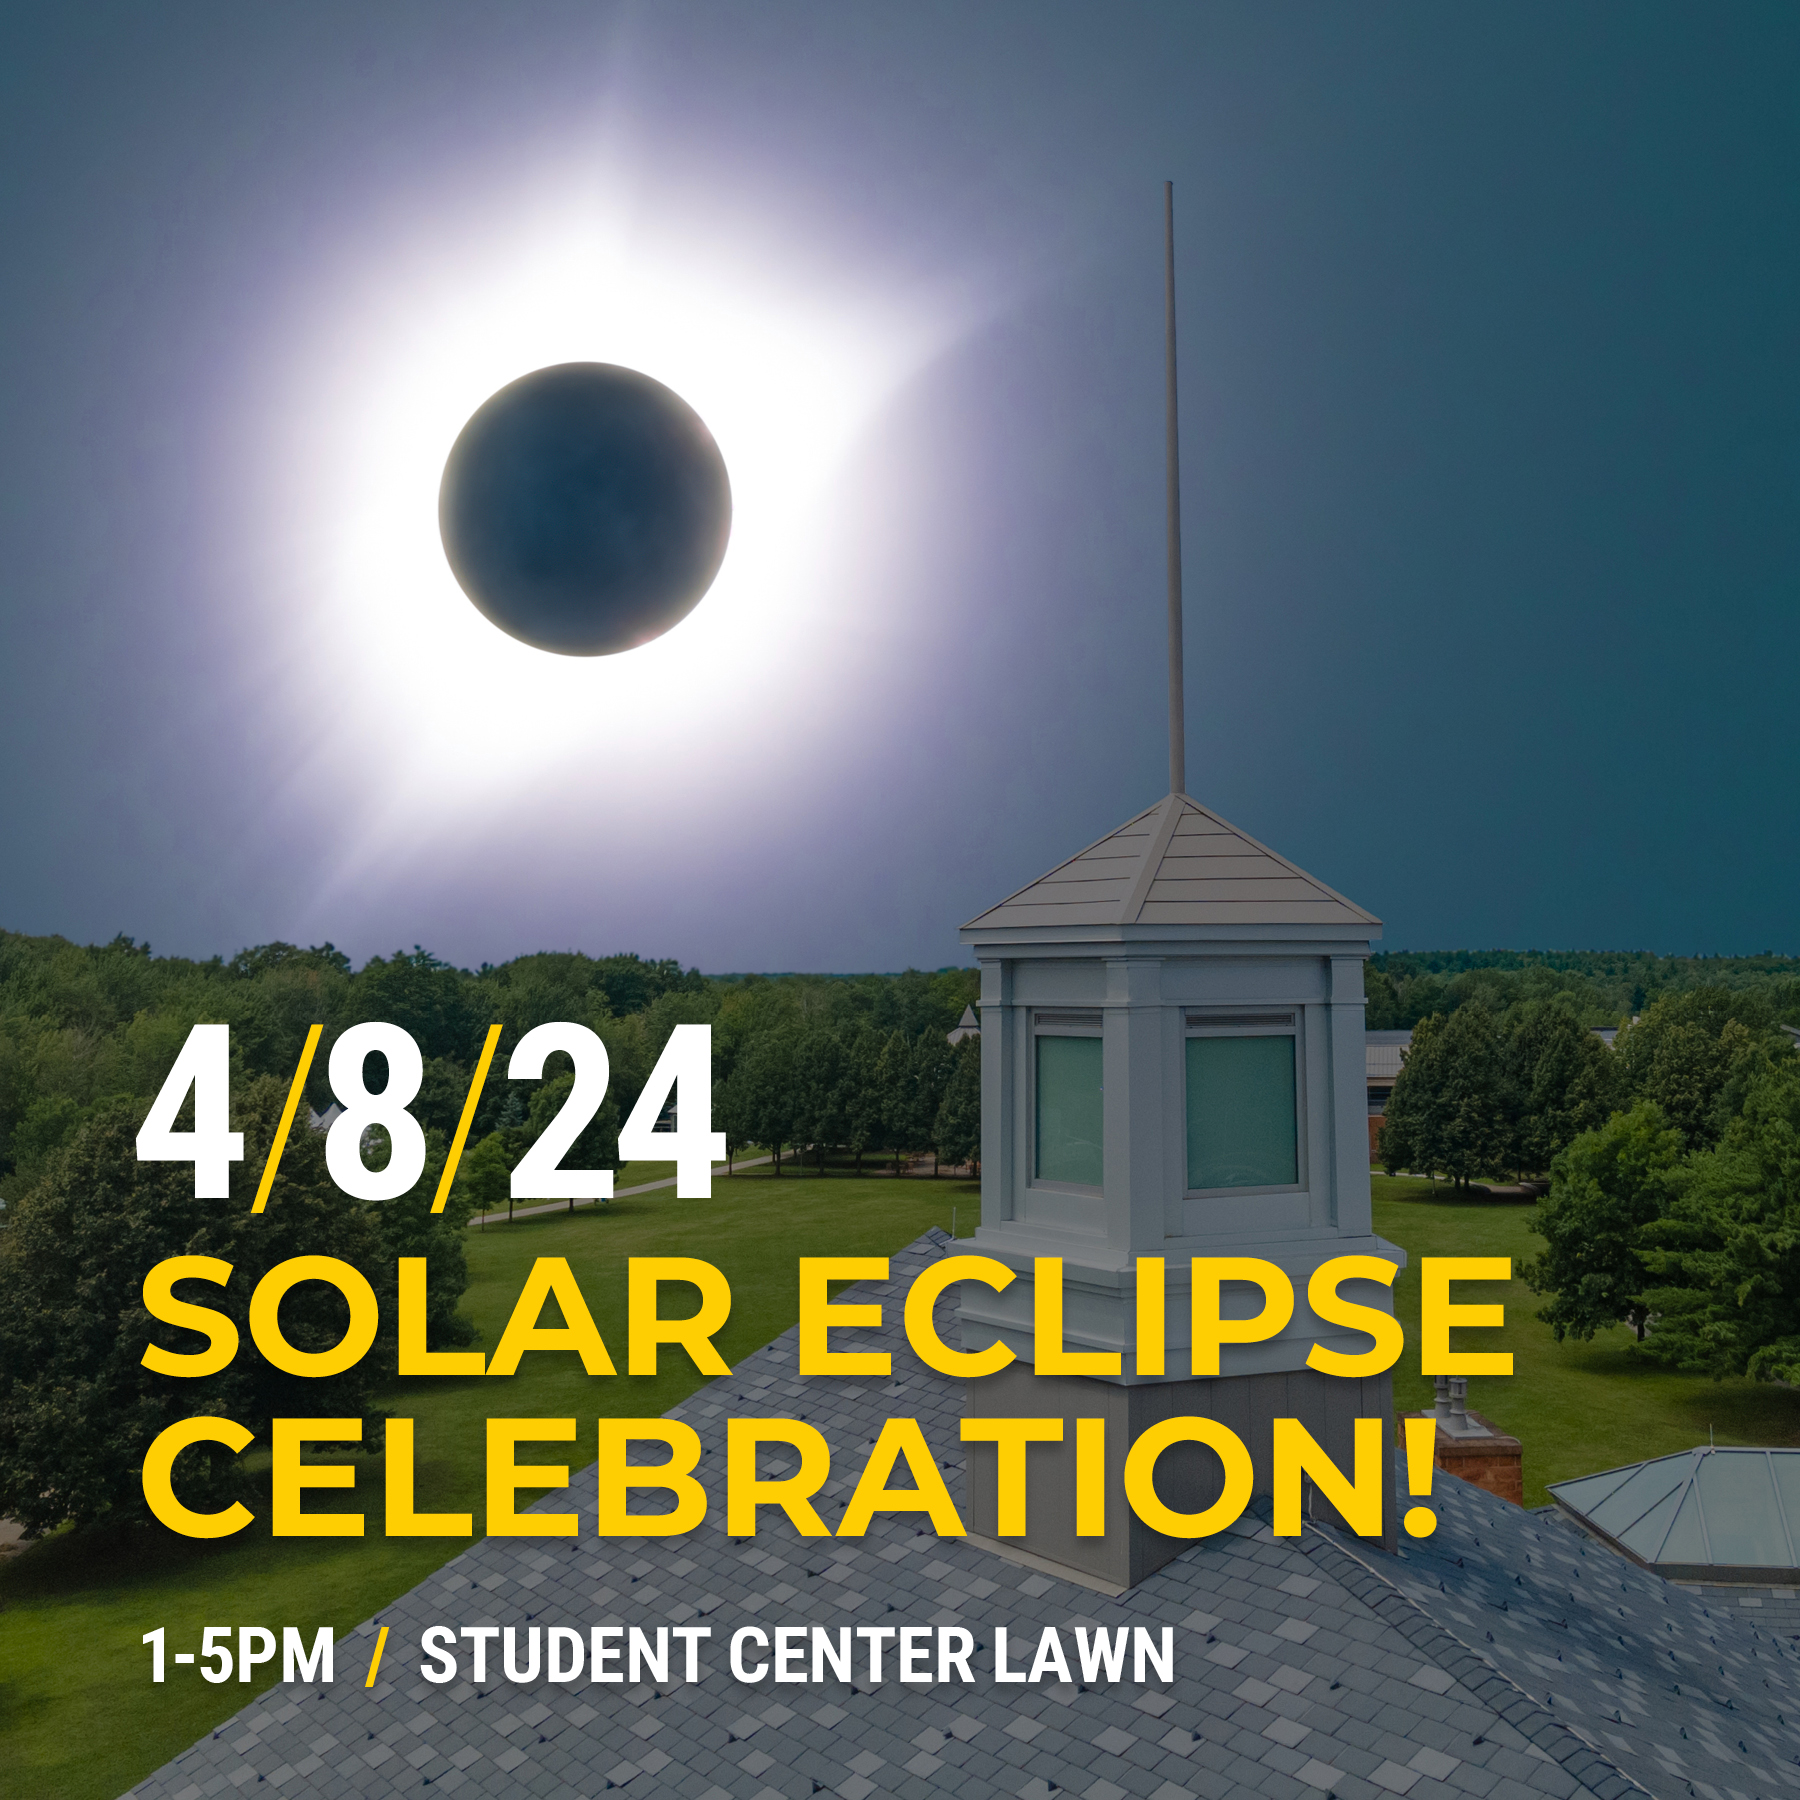 Solar Eclipse Celebration Information